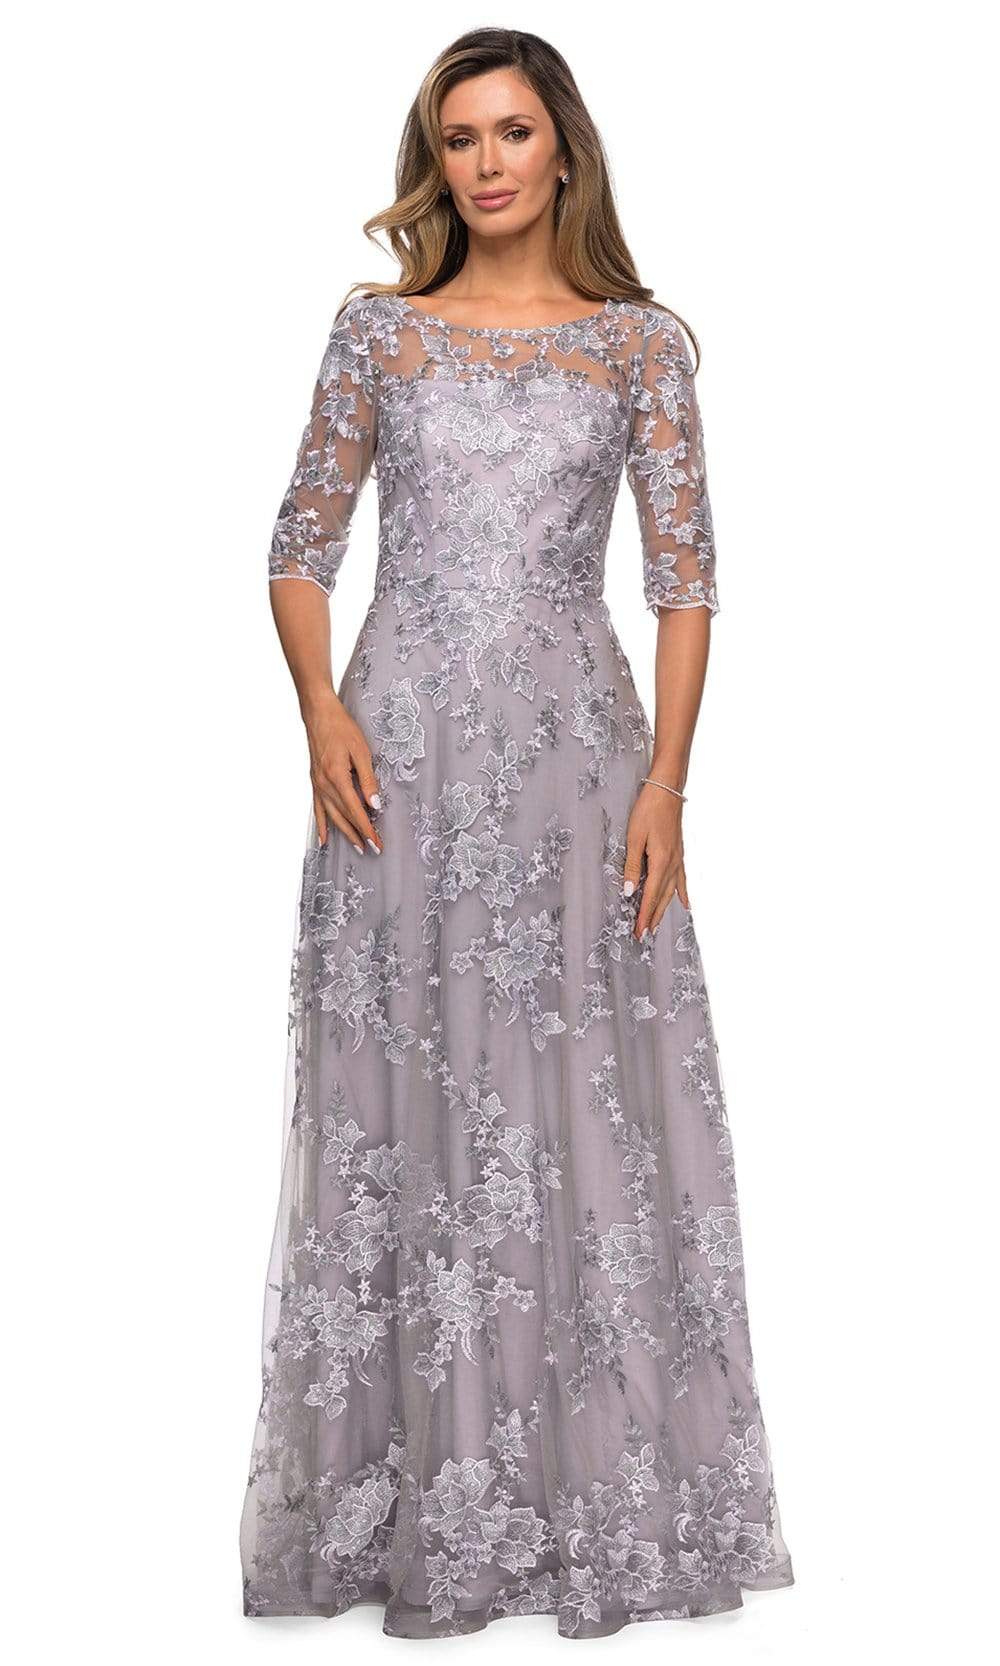 Image of La Femme - 27854 Embroidered Lace Quarter Sleeve A-Line Dress